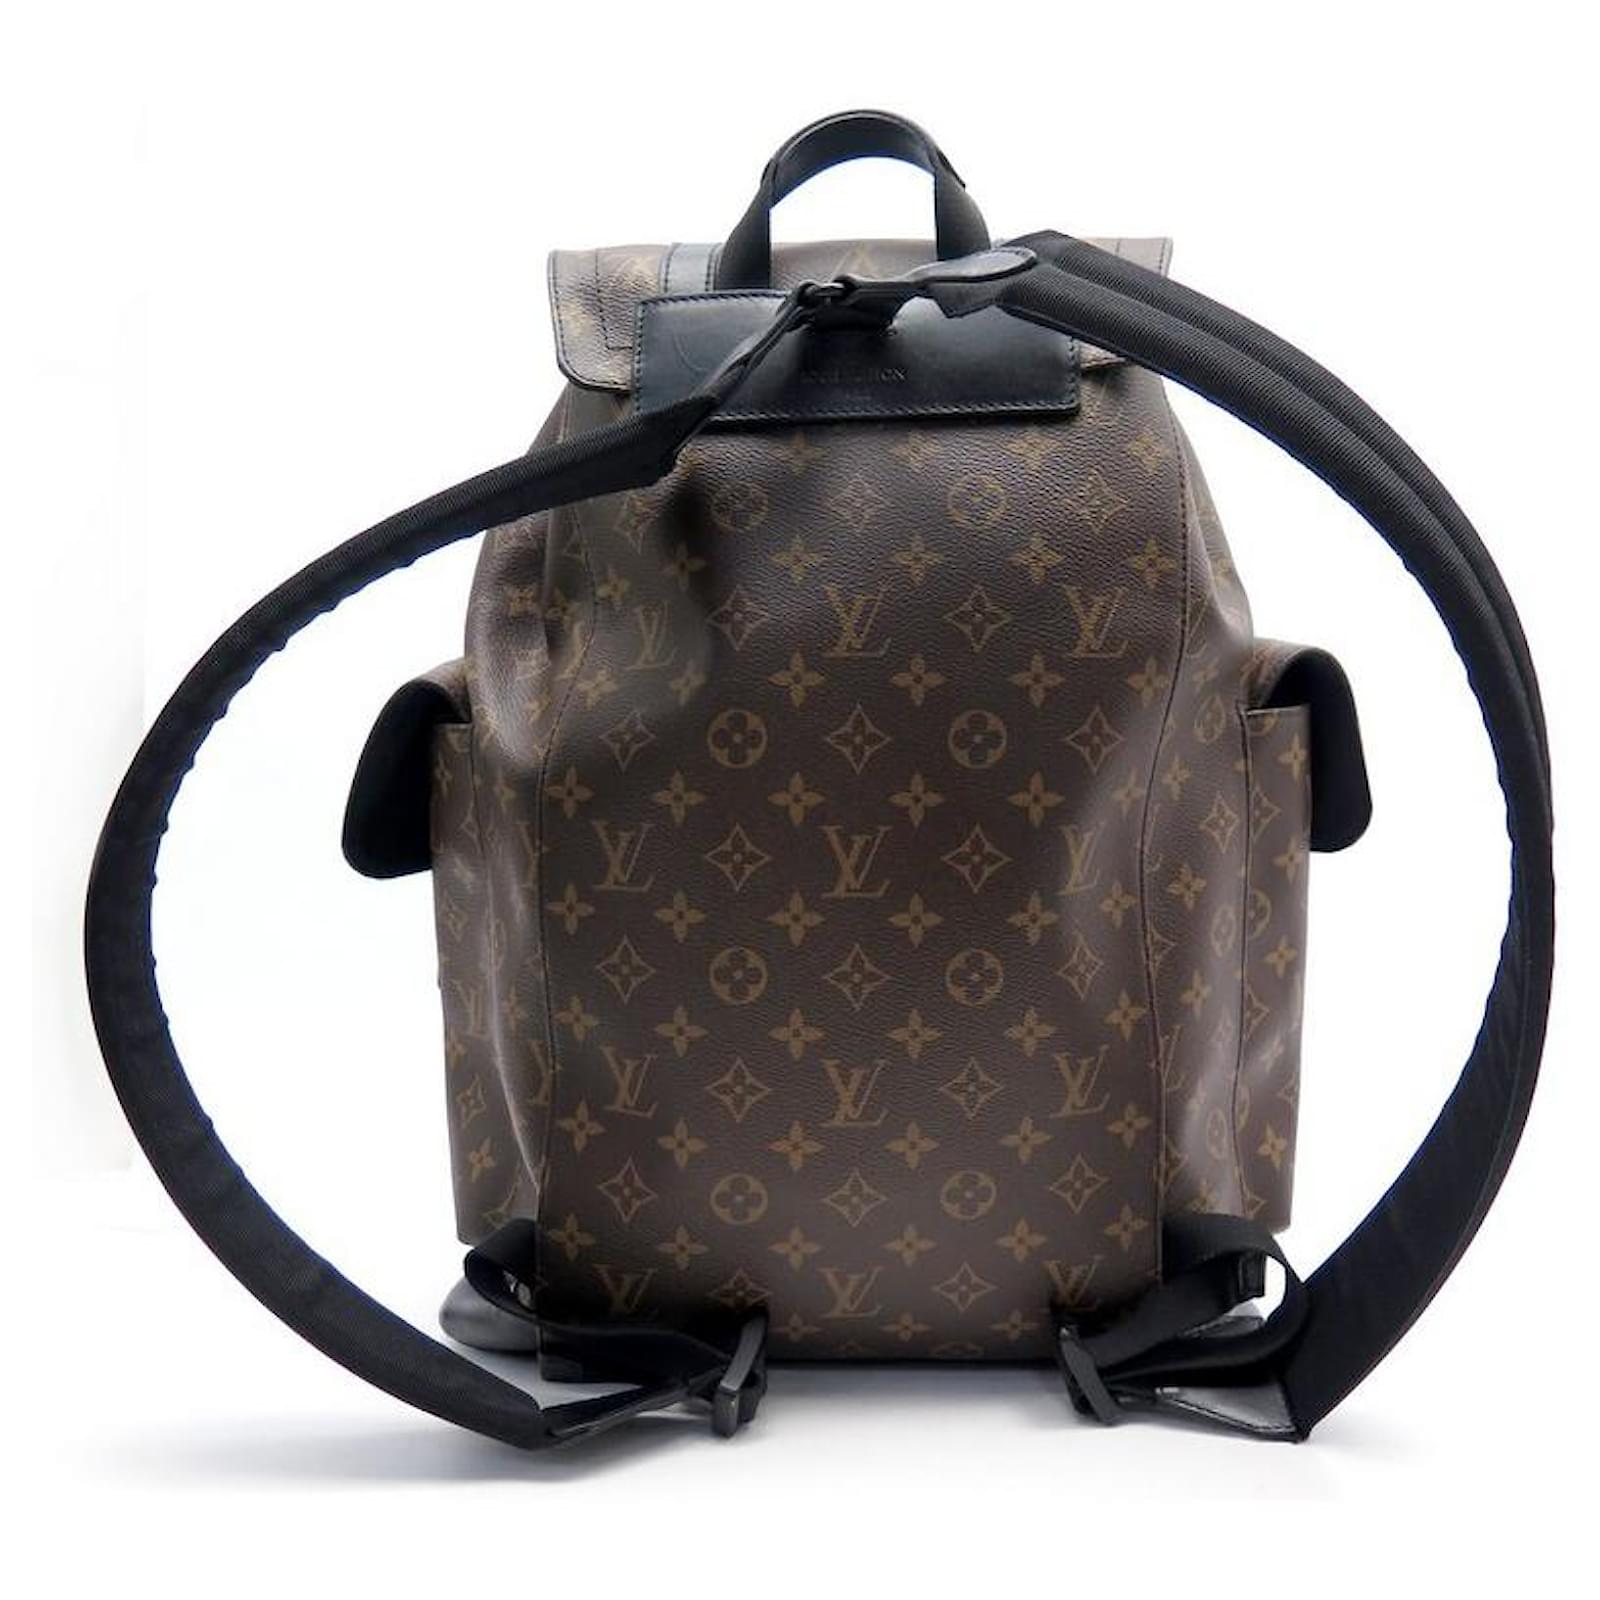 ☑ Swag Check: Chris Brown - Jordan Flight 45s & Louis Vuitton Damier  Backpack